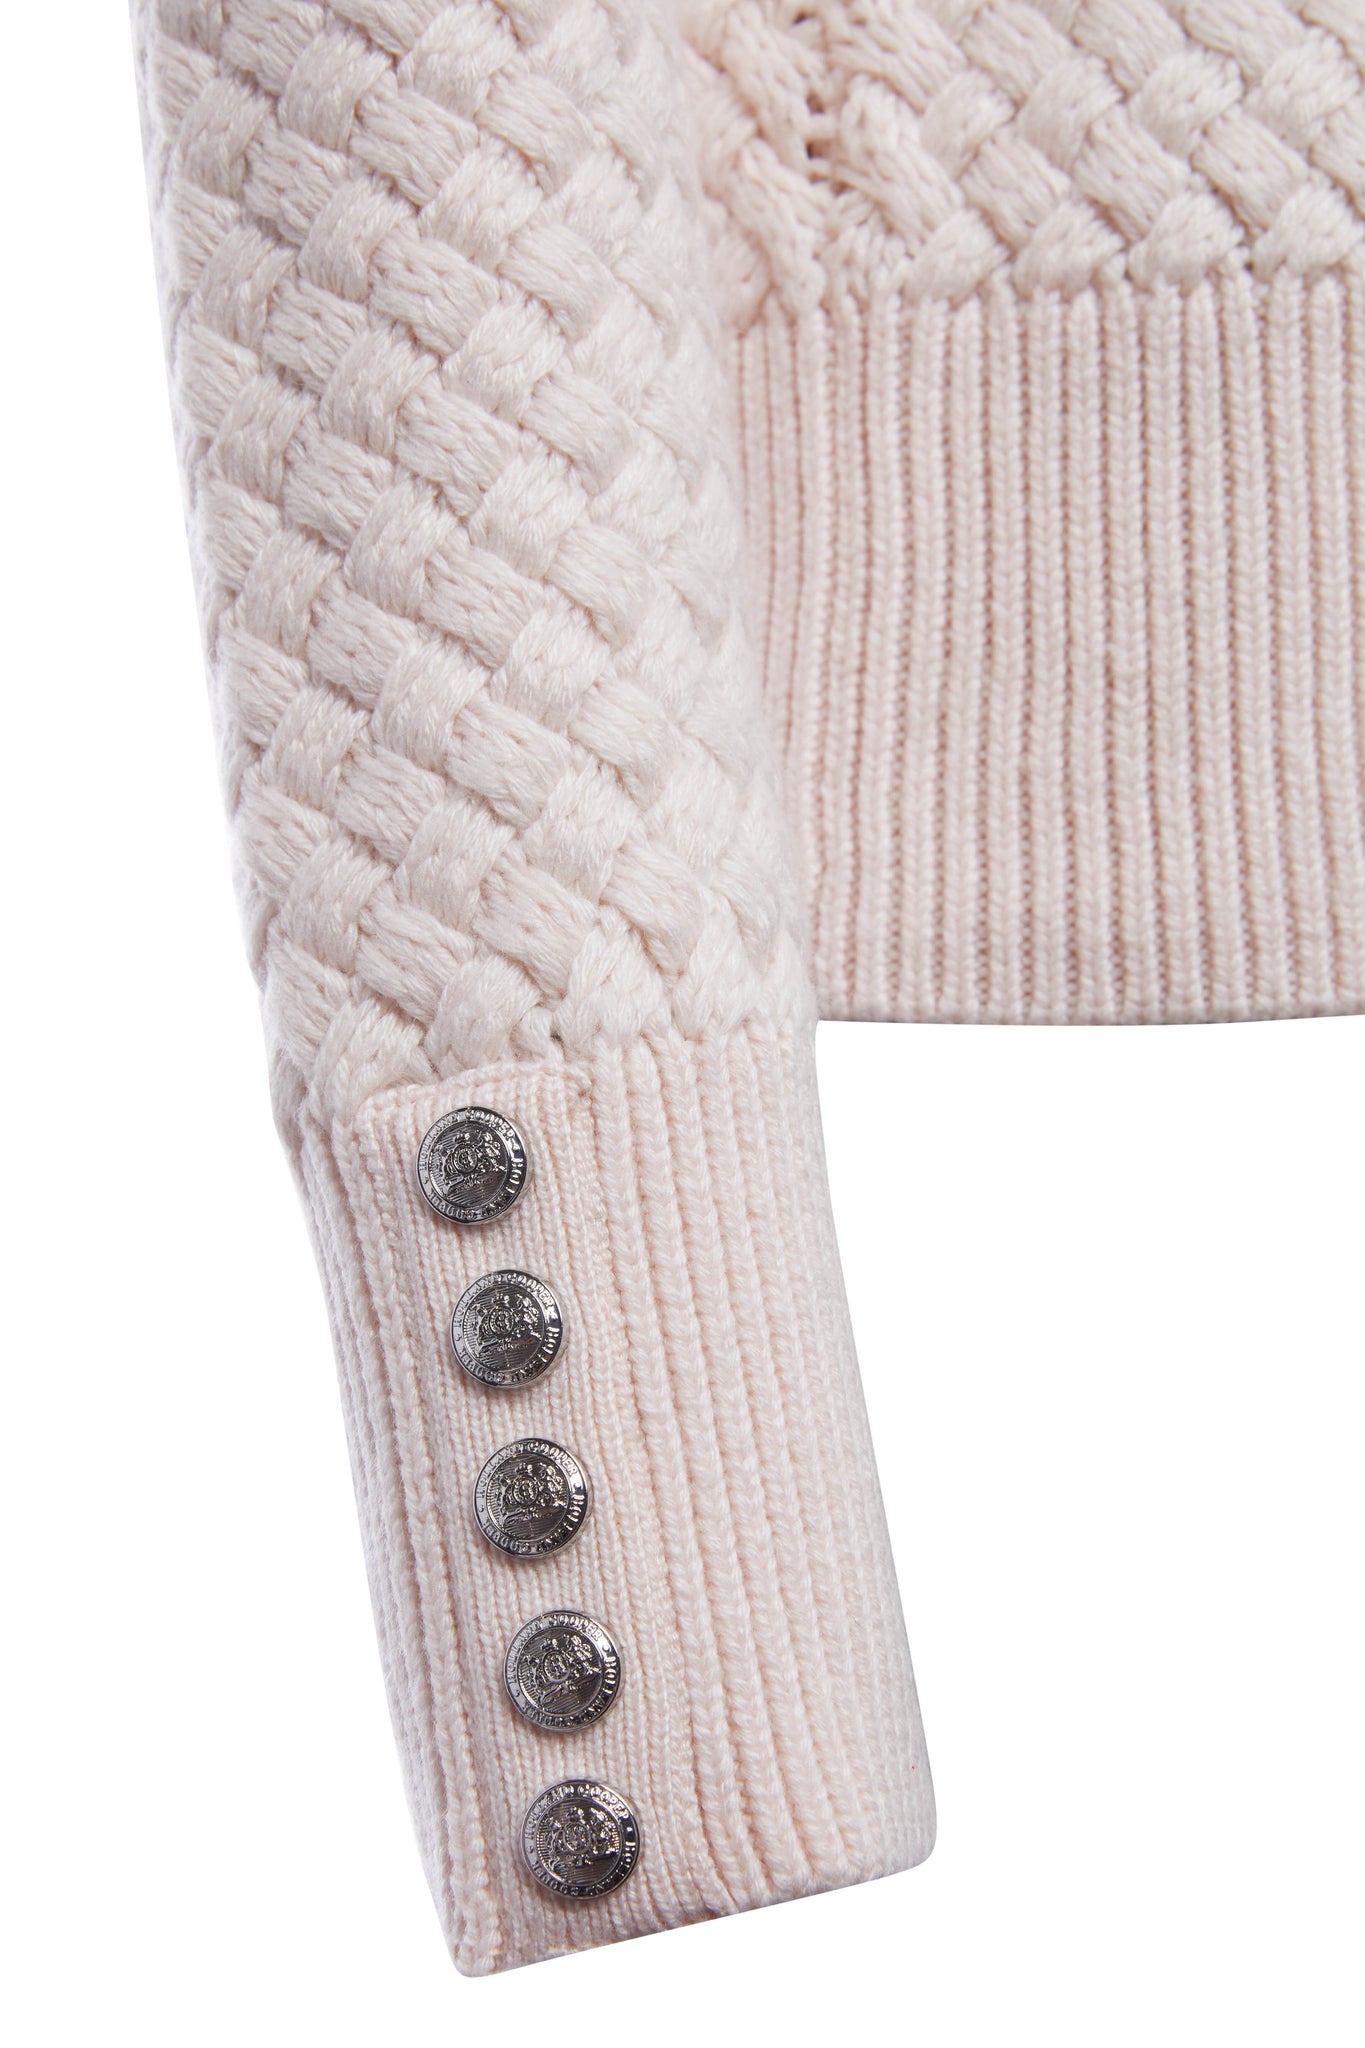 silver button cuff detail of womens lightweight roll neck basket weave knit jumper in powder pink 